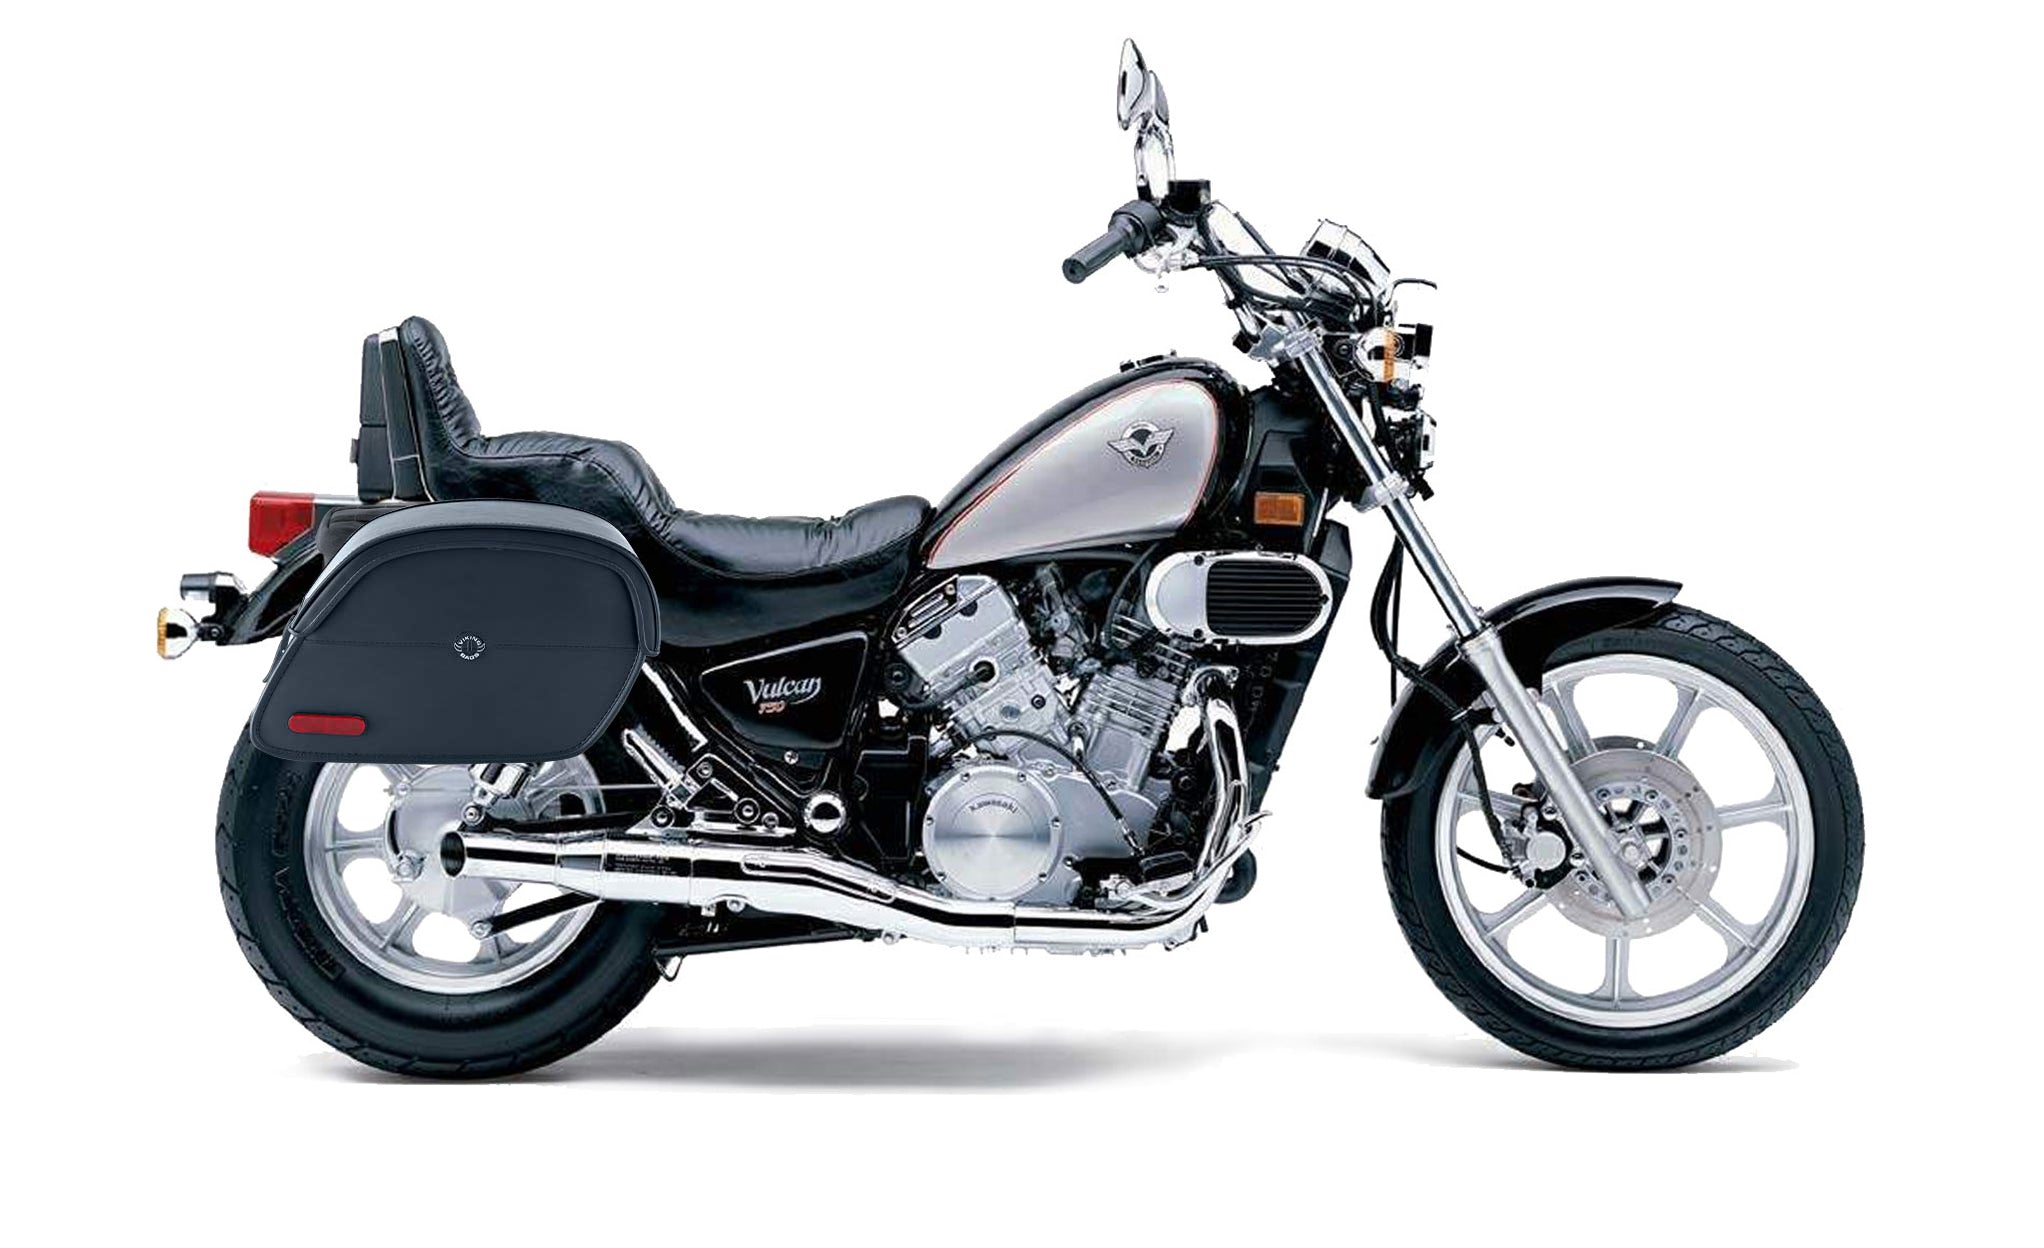 Viking California Large Kawasaki Vulcan 750 Vn750 Leather Motorcycle Saddlebags on Bike Photo @expand